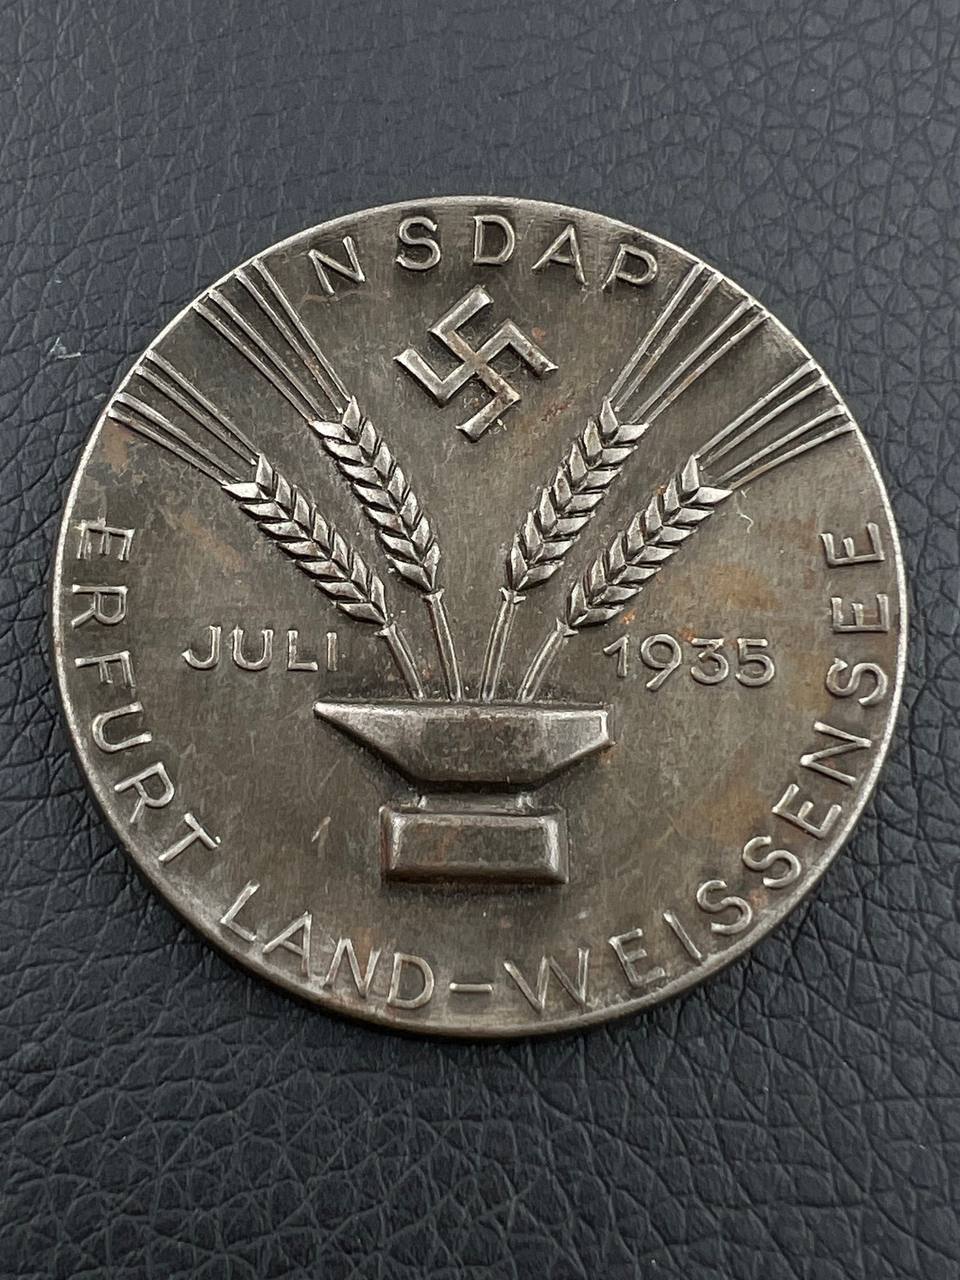 Значок NSDAP Erfurt Land-Weissensee 1935 от Алексея С.